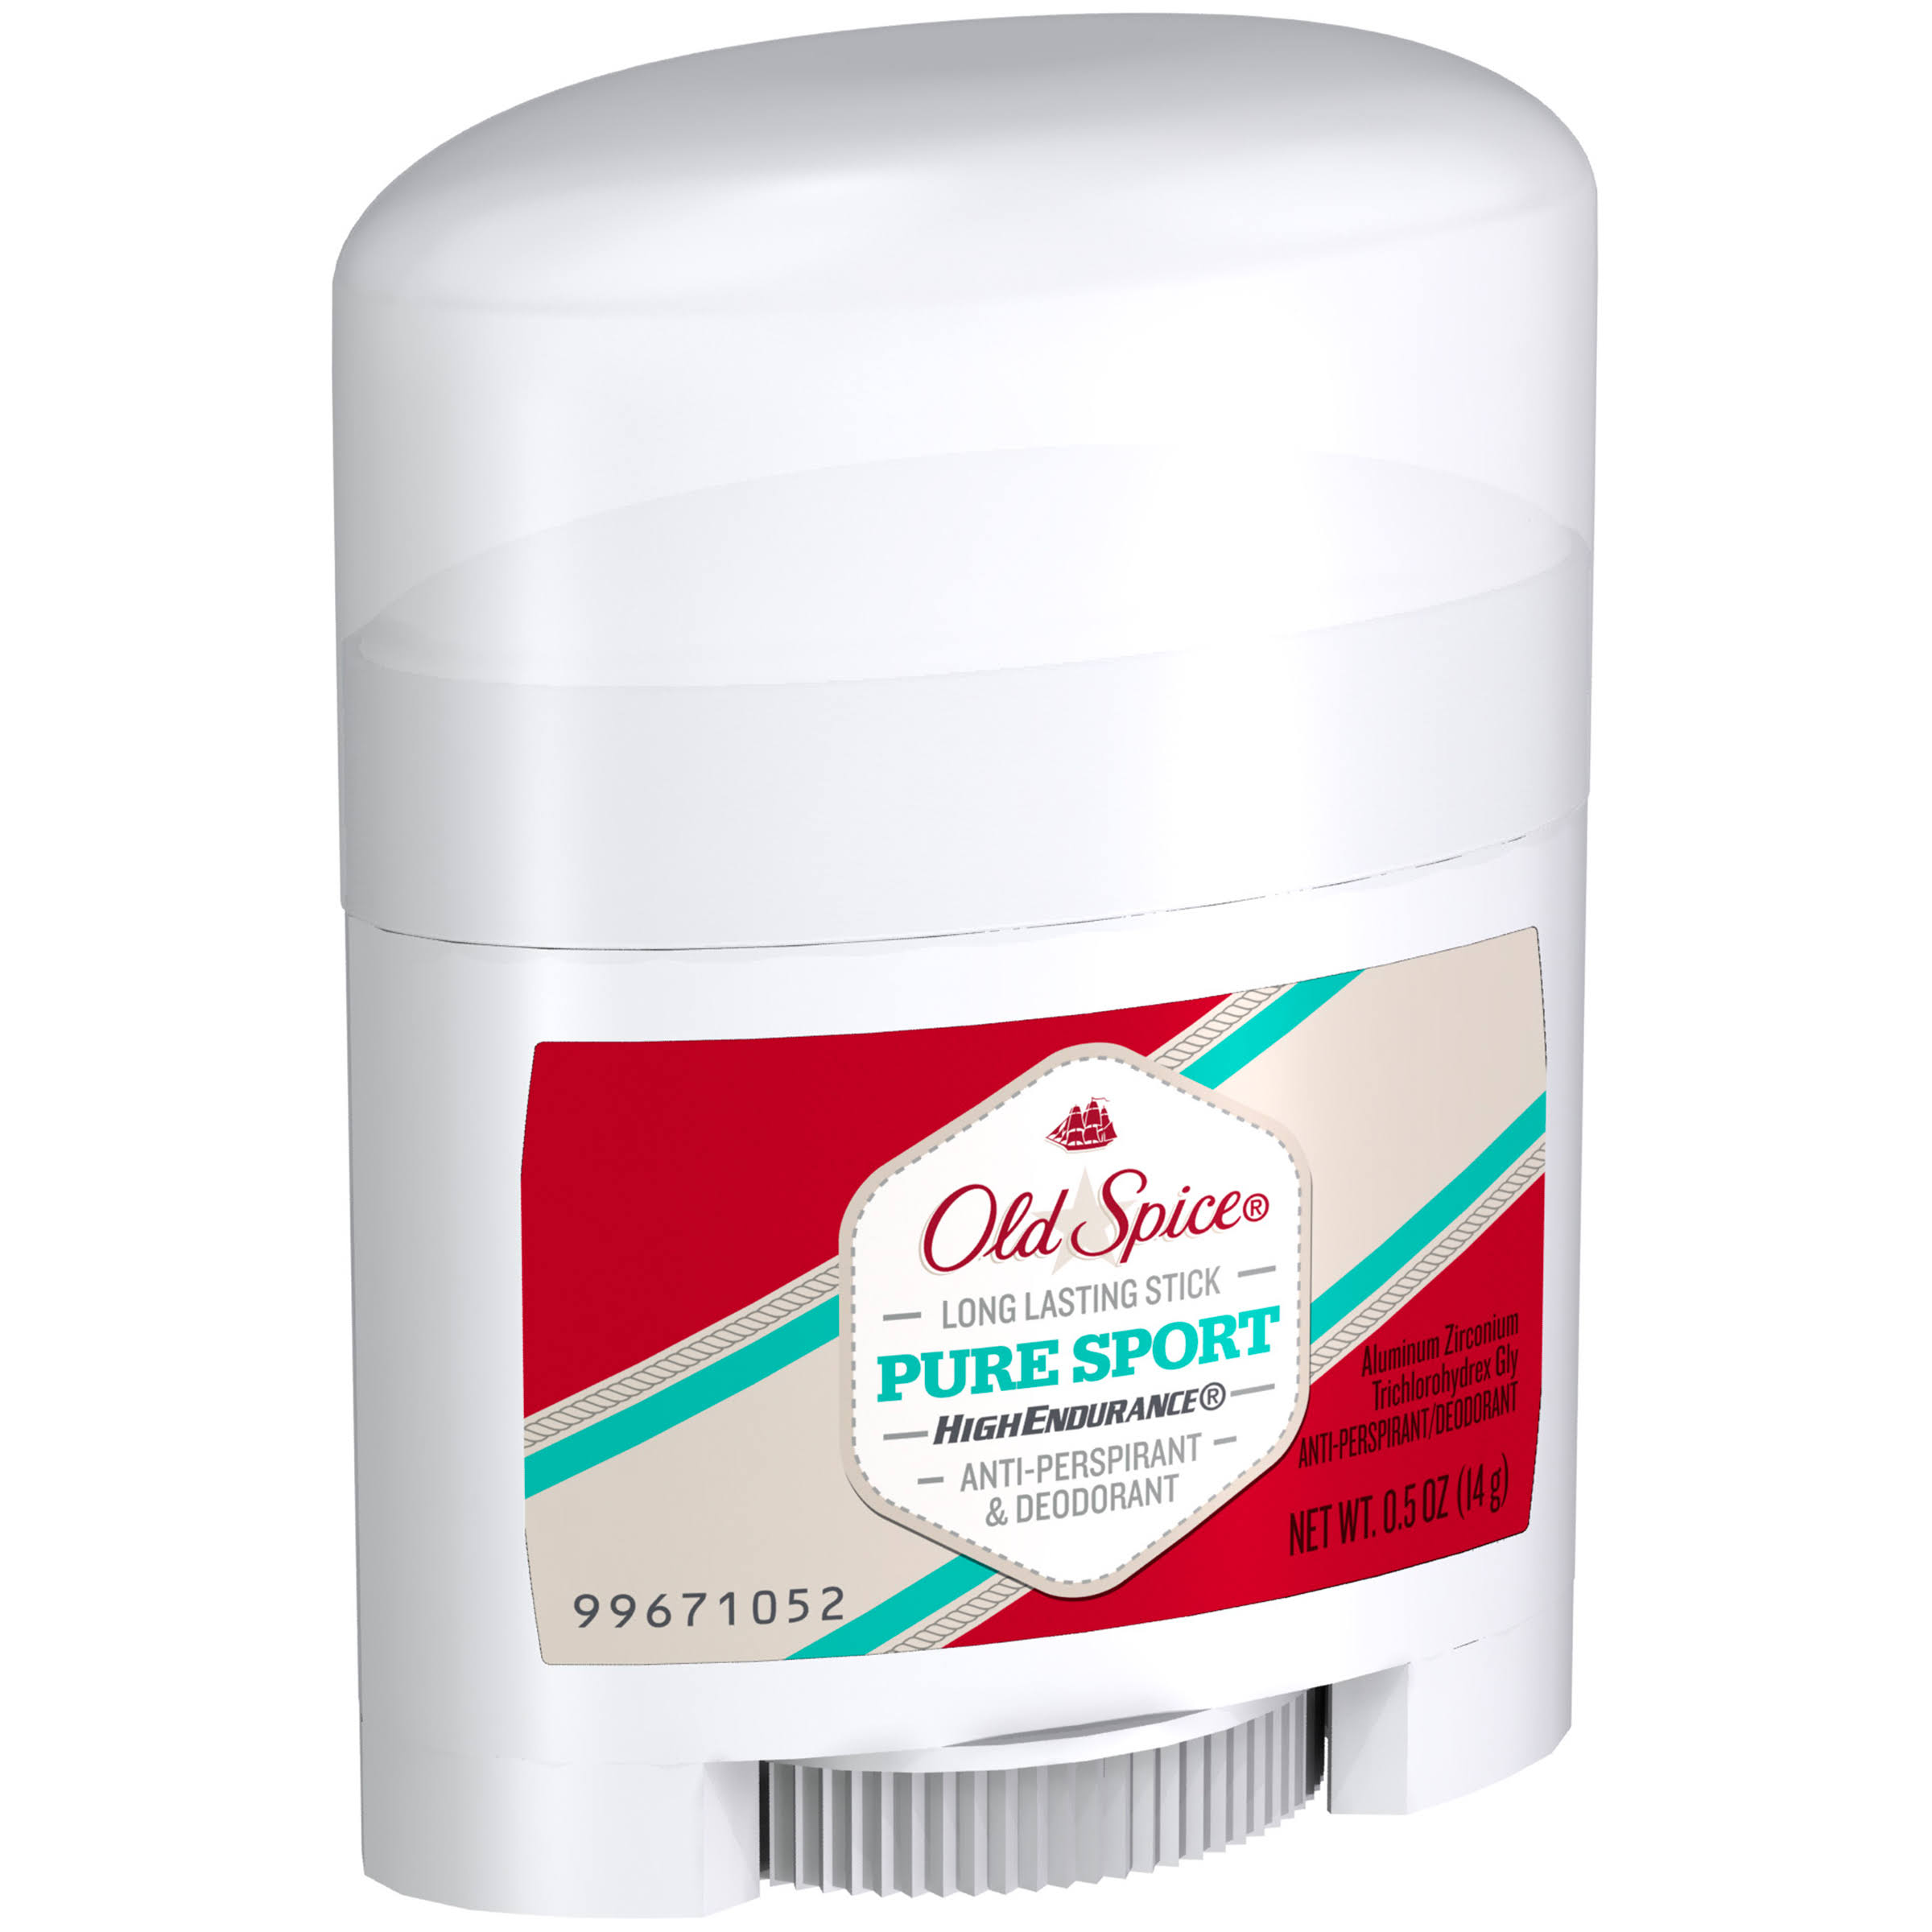 Old Spice High Endurance Anti-Perspirant Deodorant - Pure Sport, 0.5oz